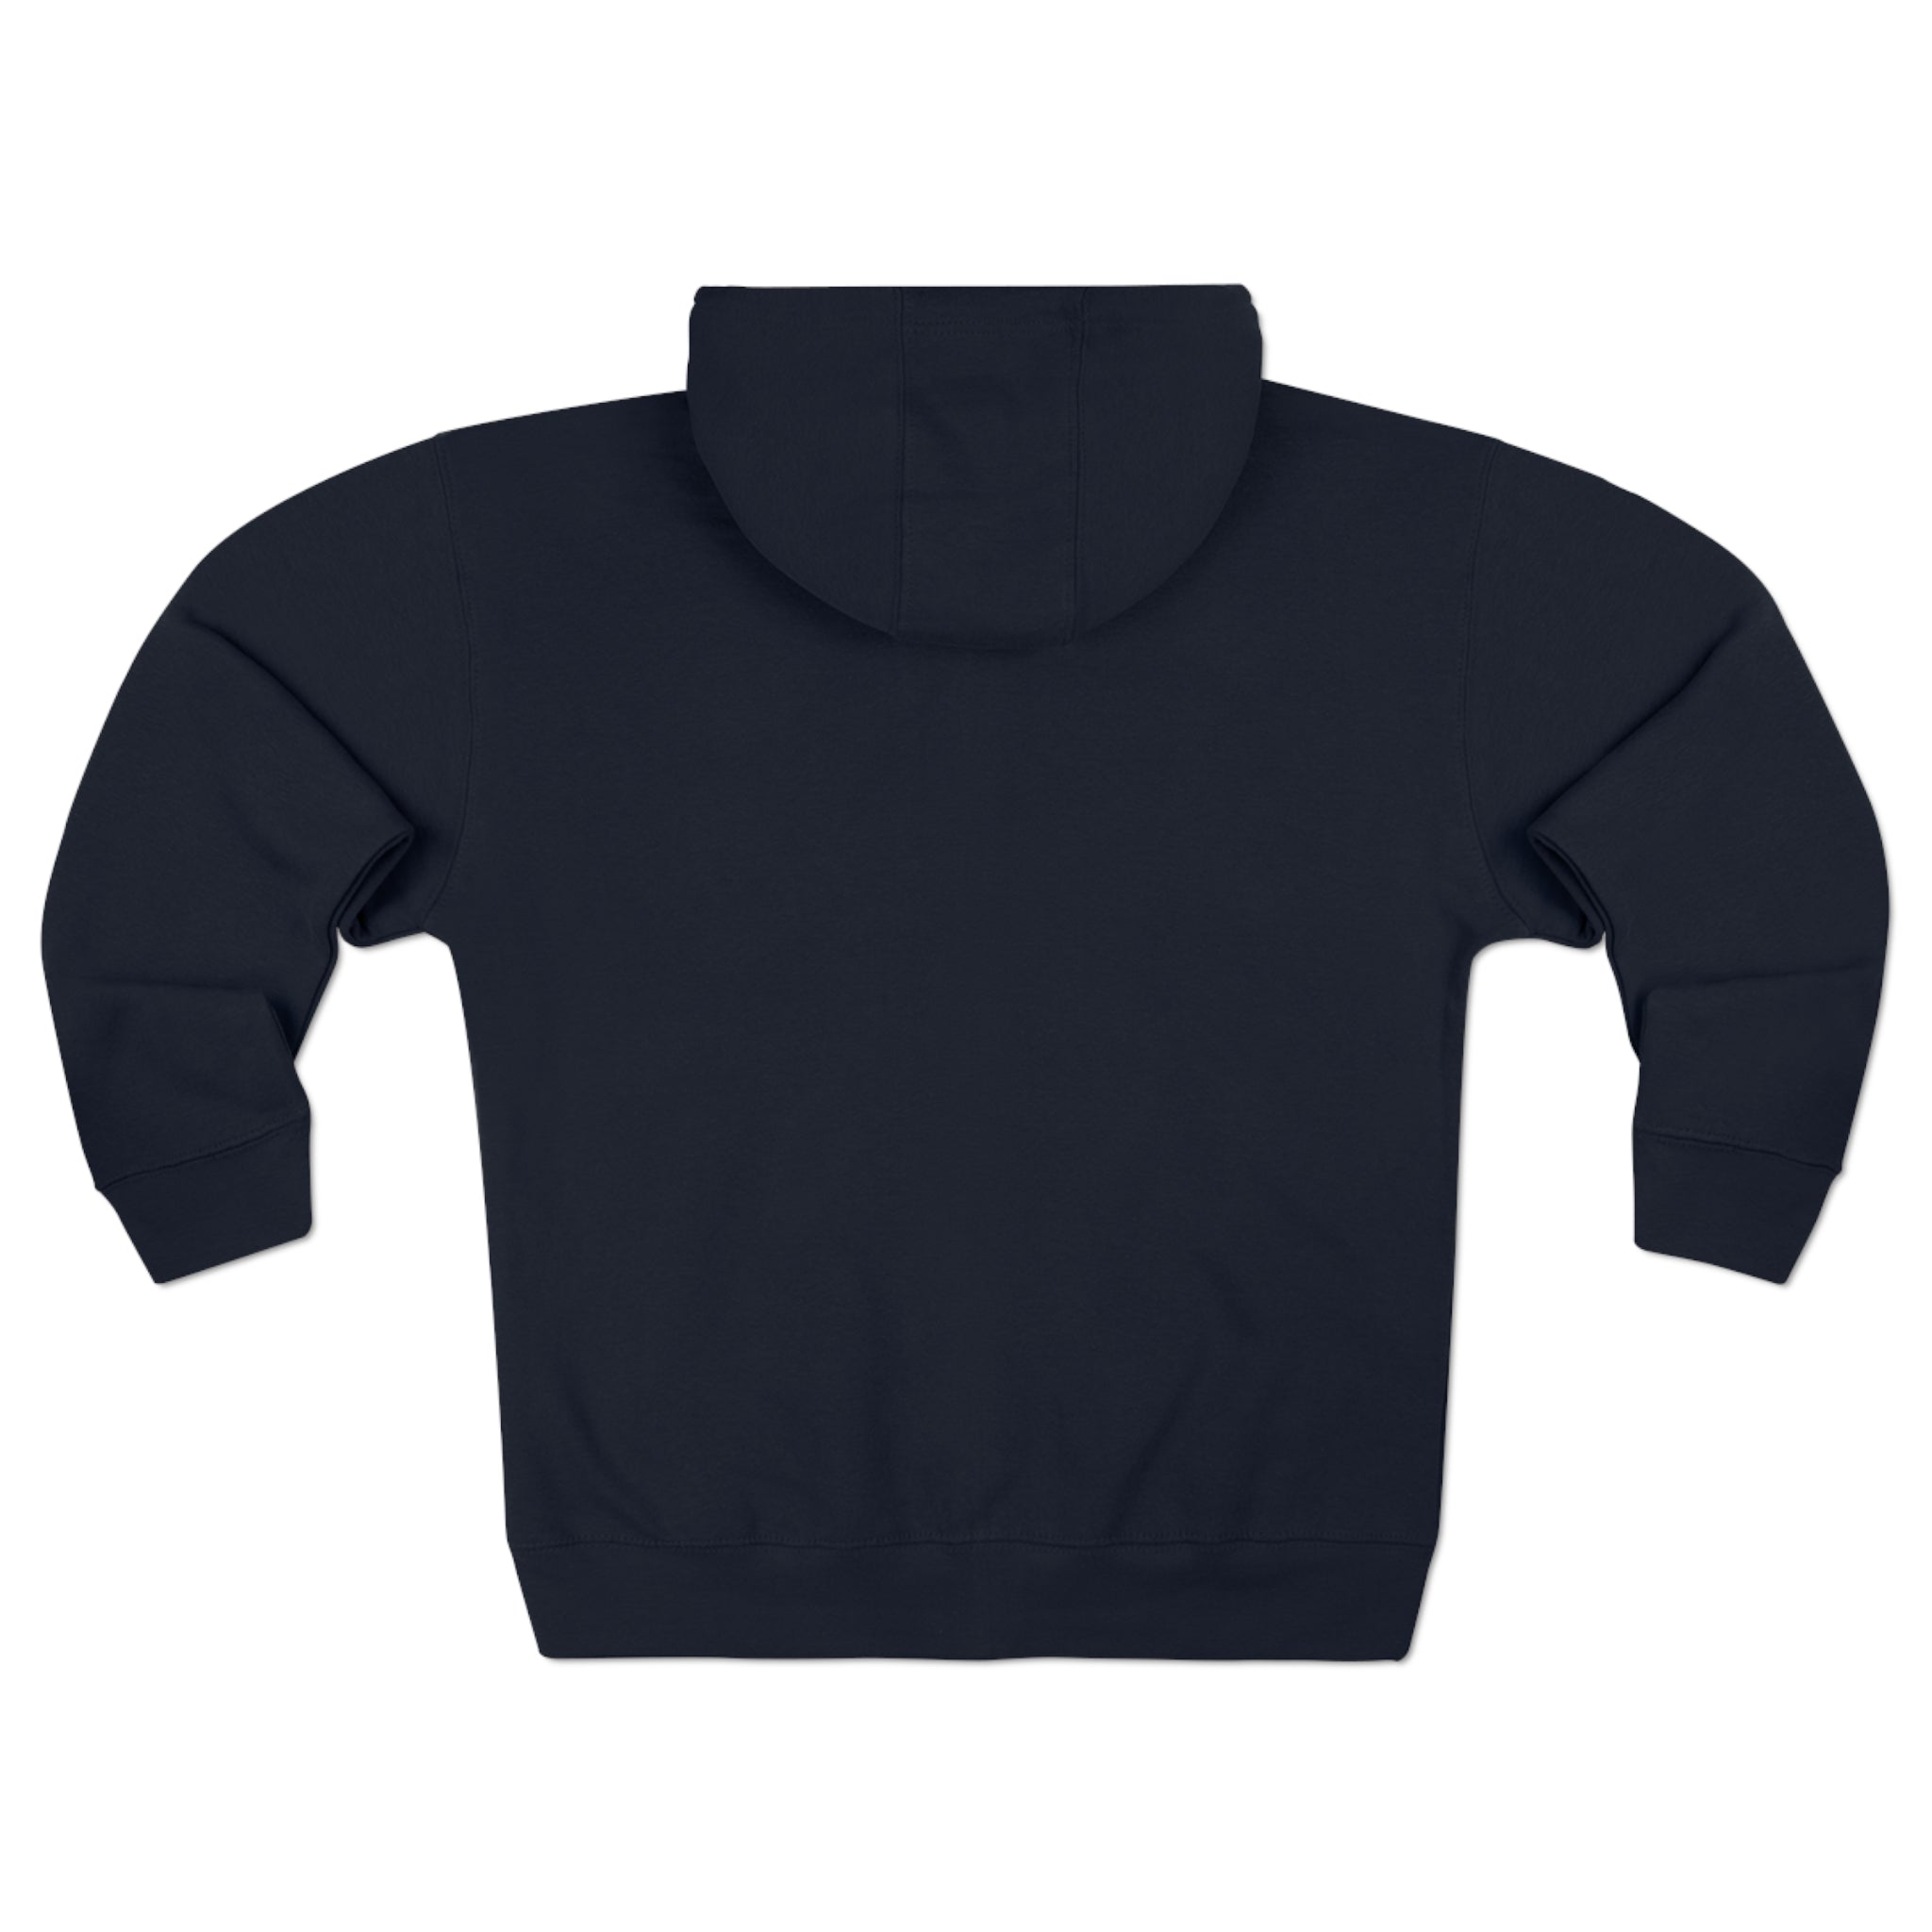 Navy Unisex USYGO Full Zip Hoodie - Premium comfort and style. 